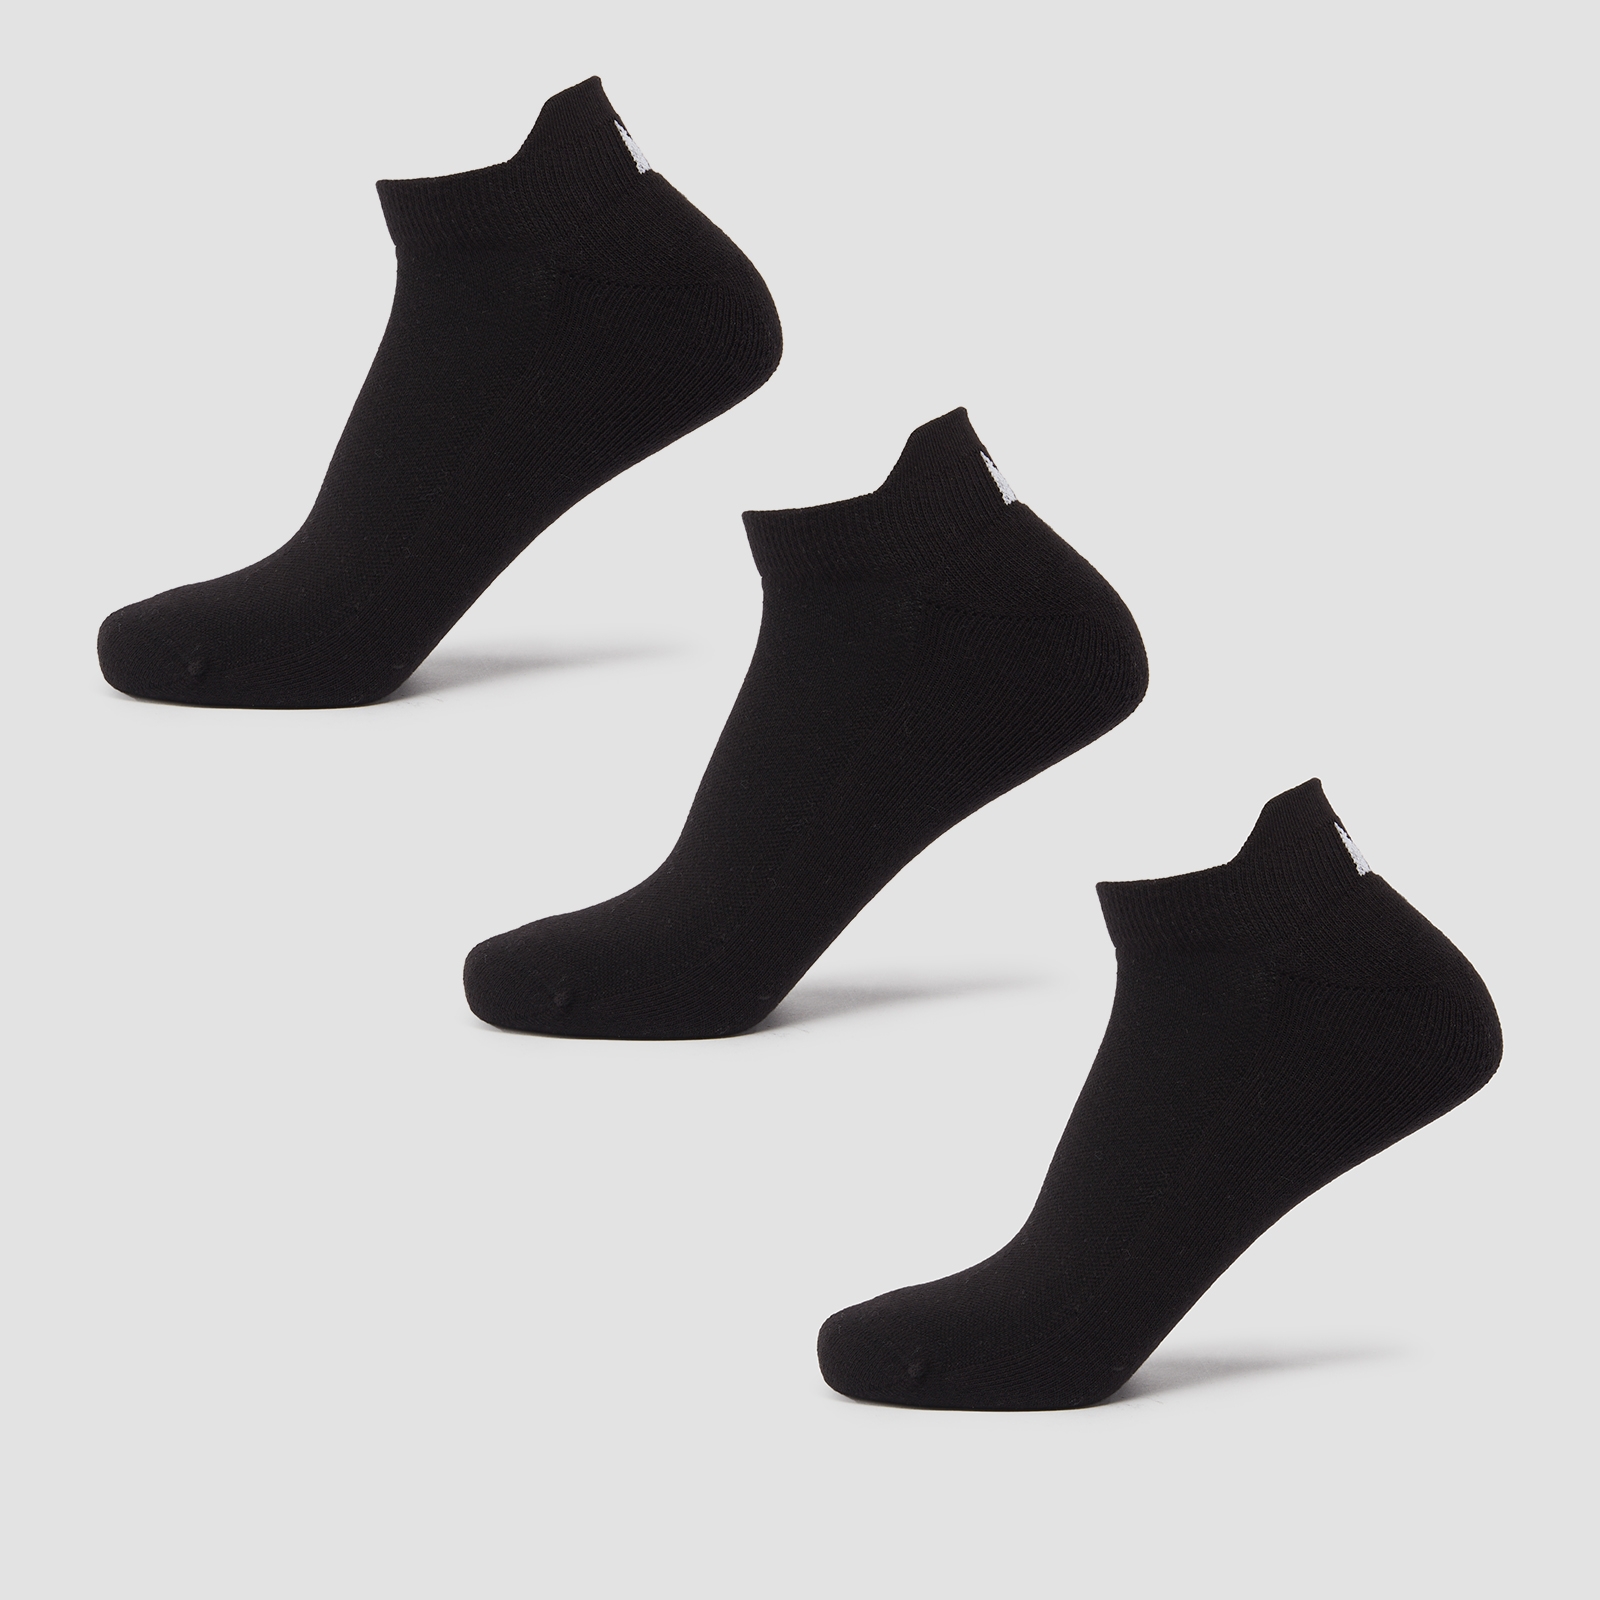 Tất Unisex Trainer Socks của MP (3 gói) - Màu đen